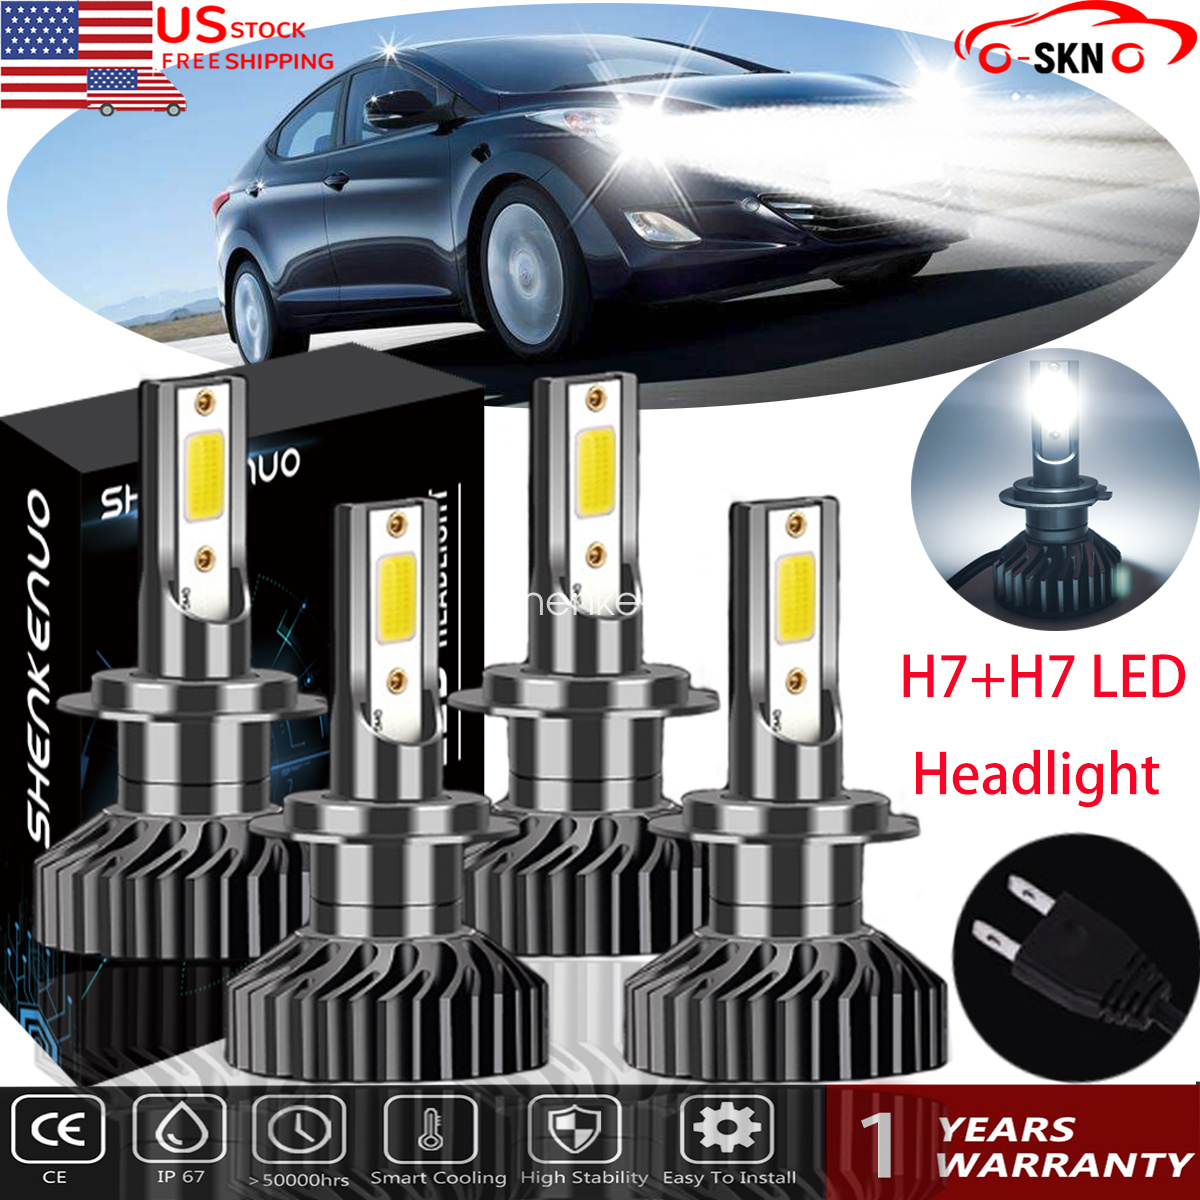 4X H7+H7 LED Headlight Bulb HighLow Beam S2 For Hyundai